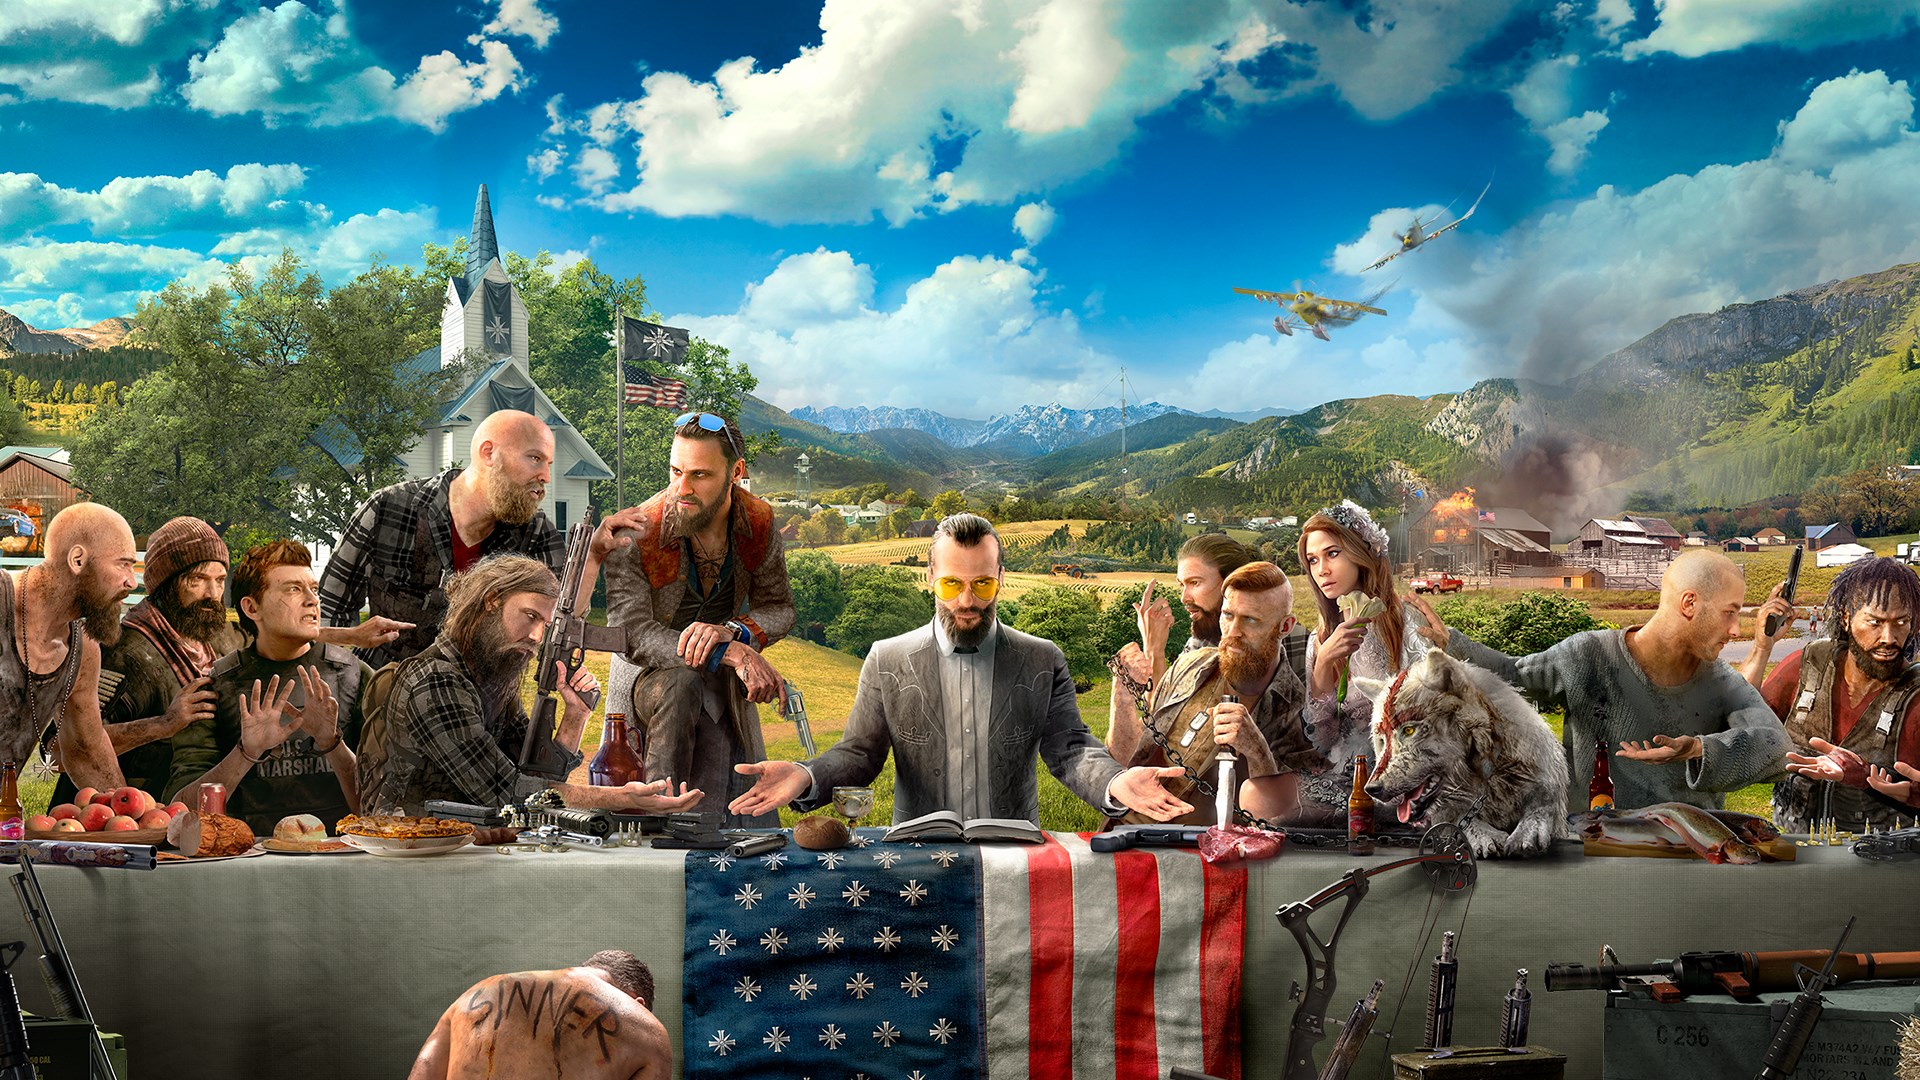 Far Cry 6: Gold Edition - Xbox Series X|S/Xbox One (Digital)